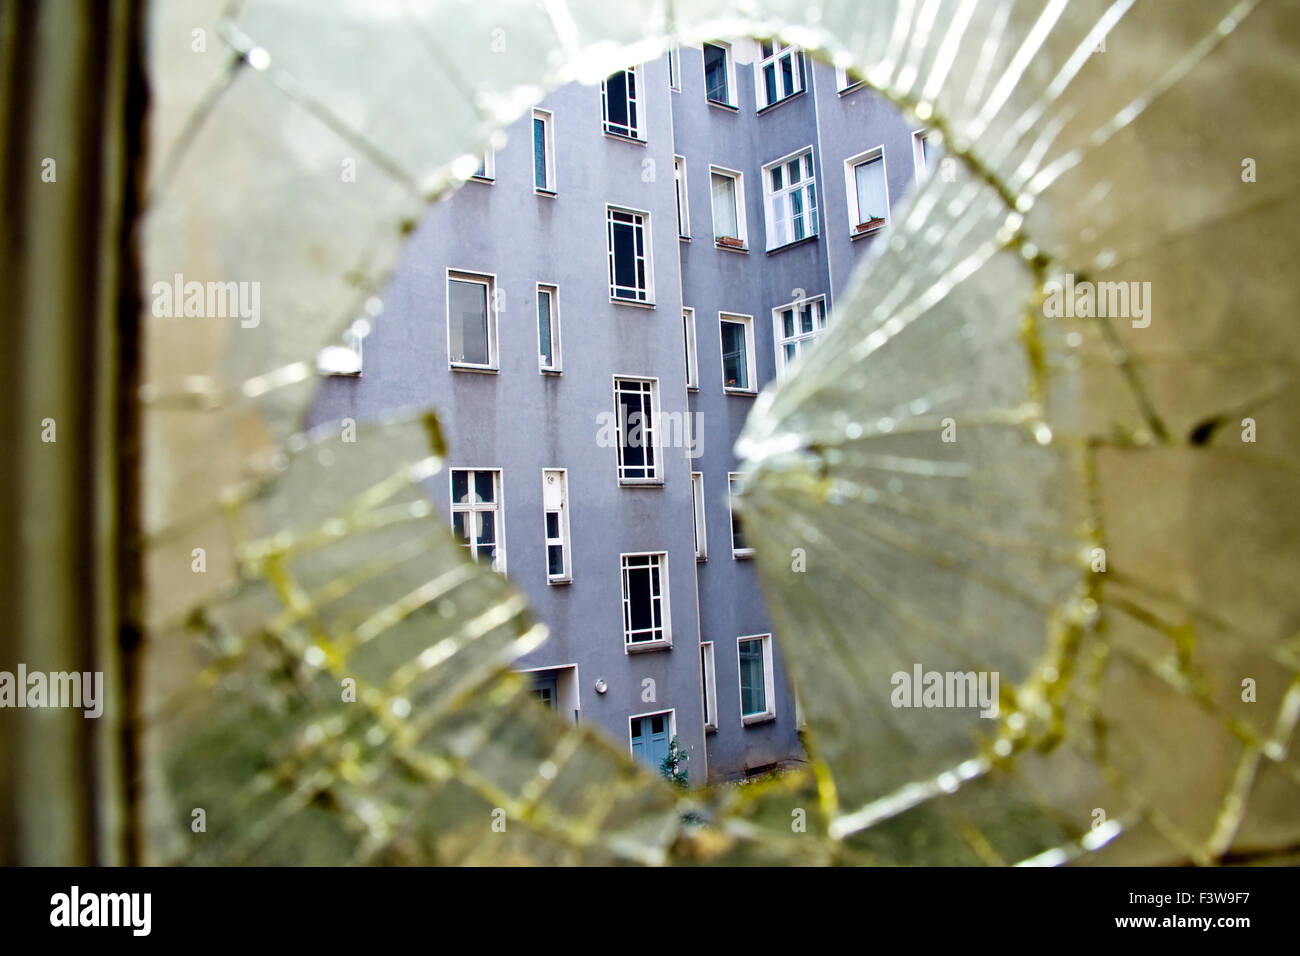 windows, broken pieces of glass, Stock Photo